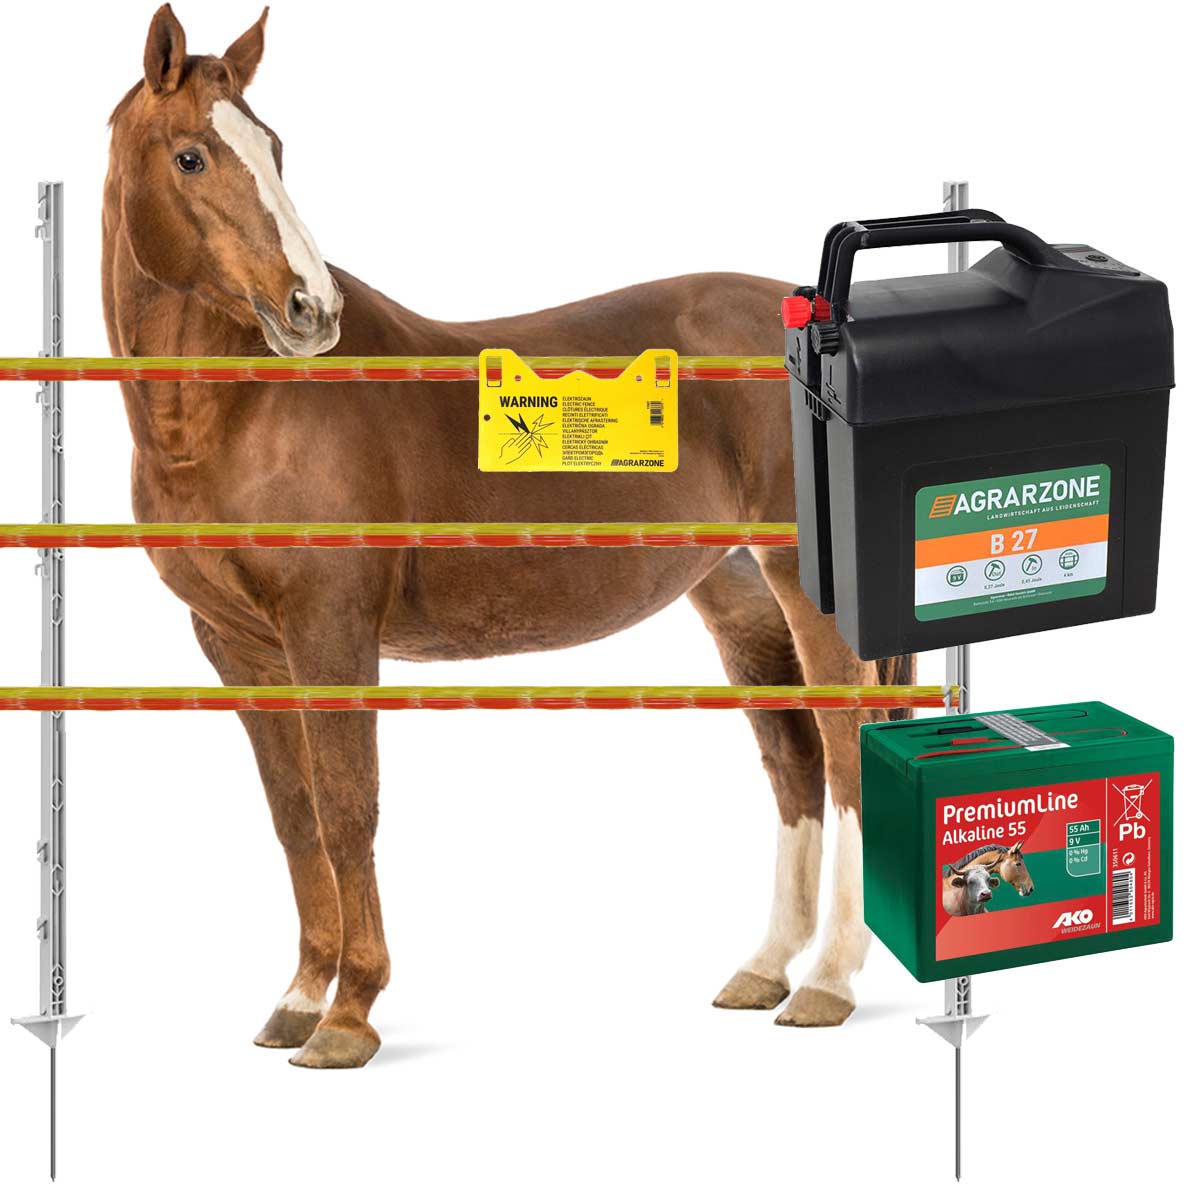 Agrarzone kit recinto elettrico per cavalli B27 a batteria 9V, 0,45J, nastro 250m